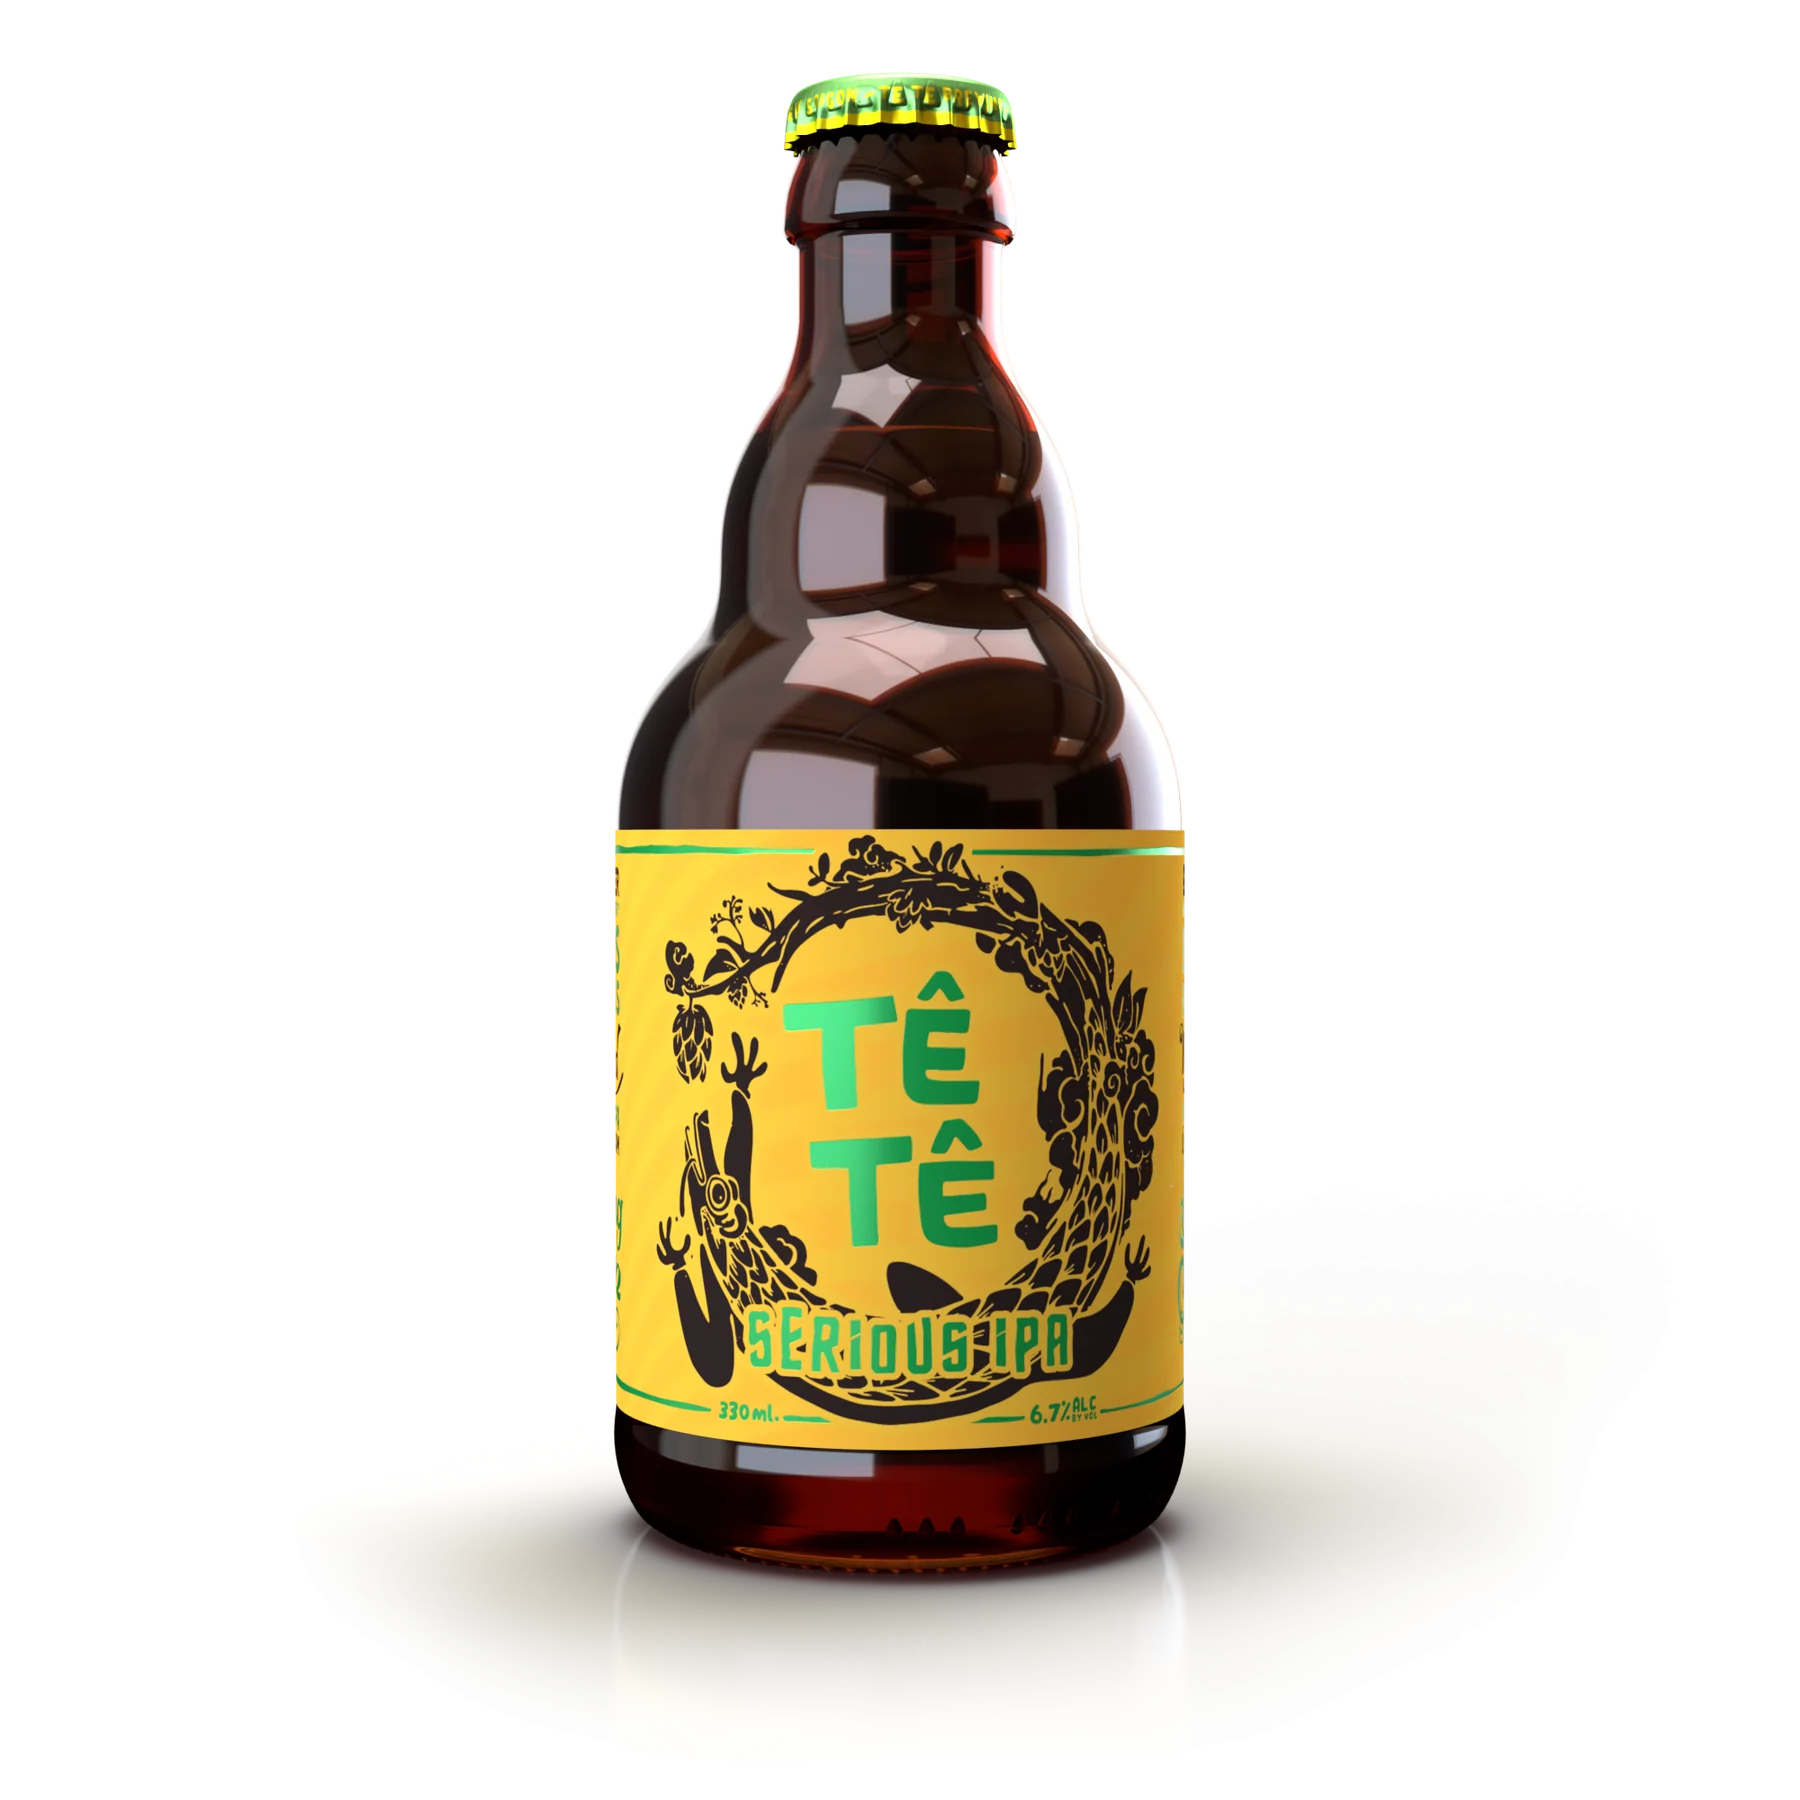 Tete 手工啤酒 Serious IPA